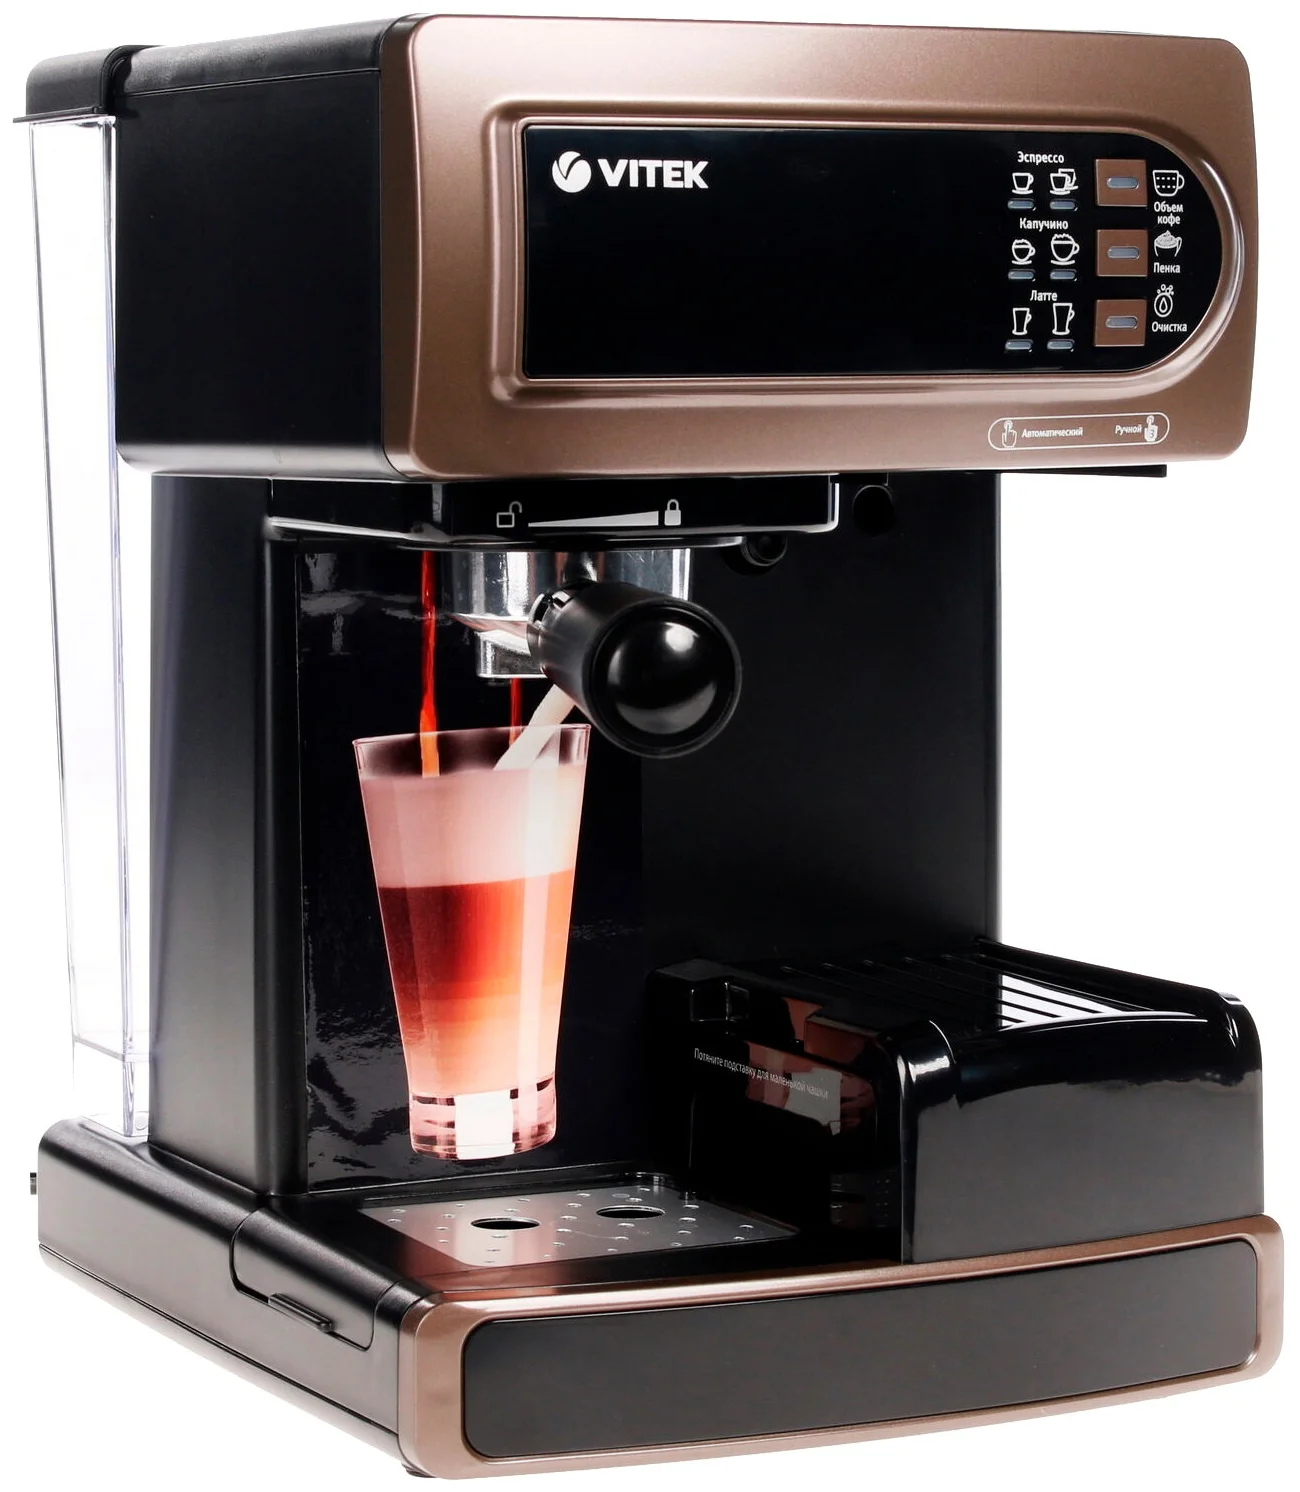 VITEK VT-1517 BN - тип напитка: латте, капучино, эспрессо